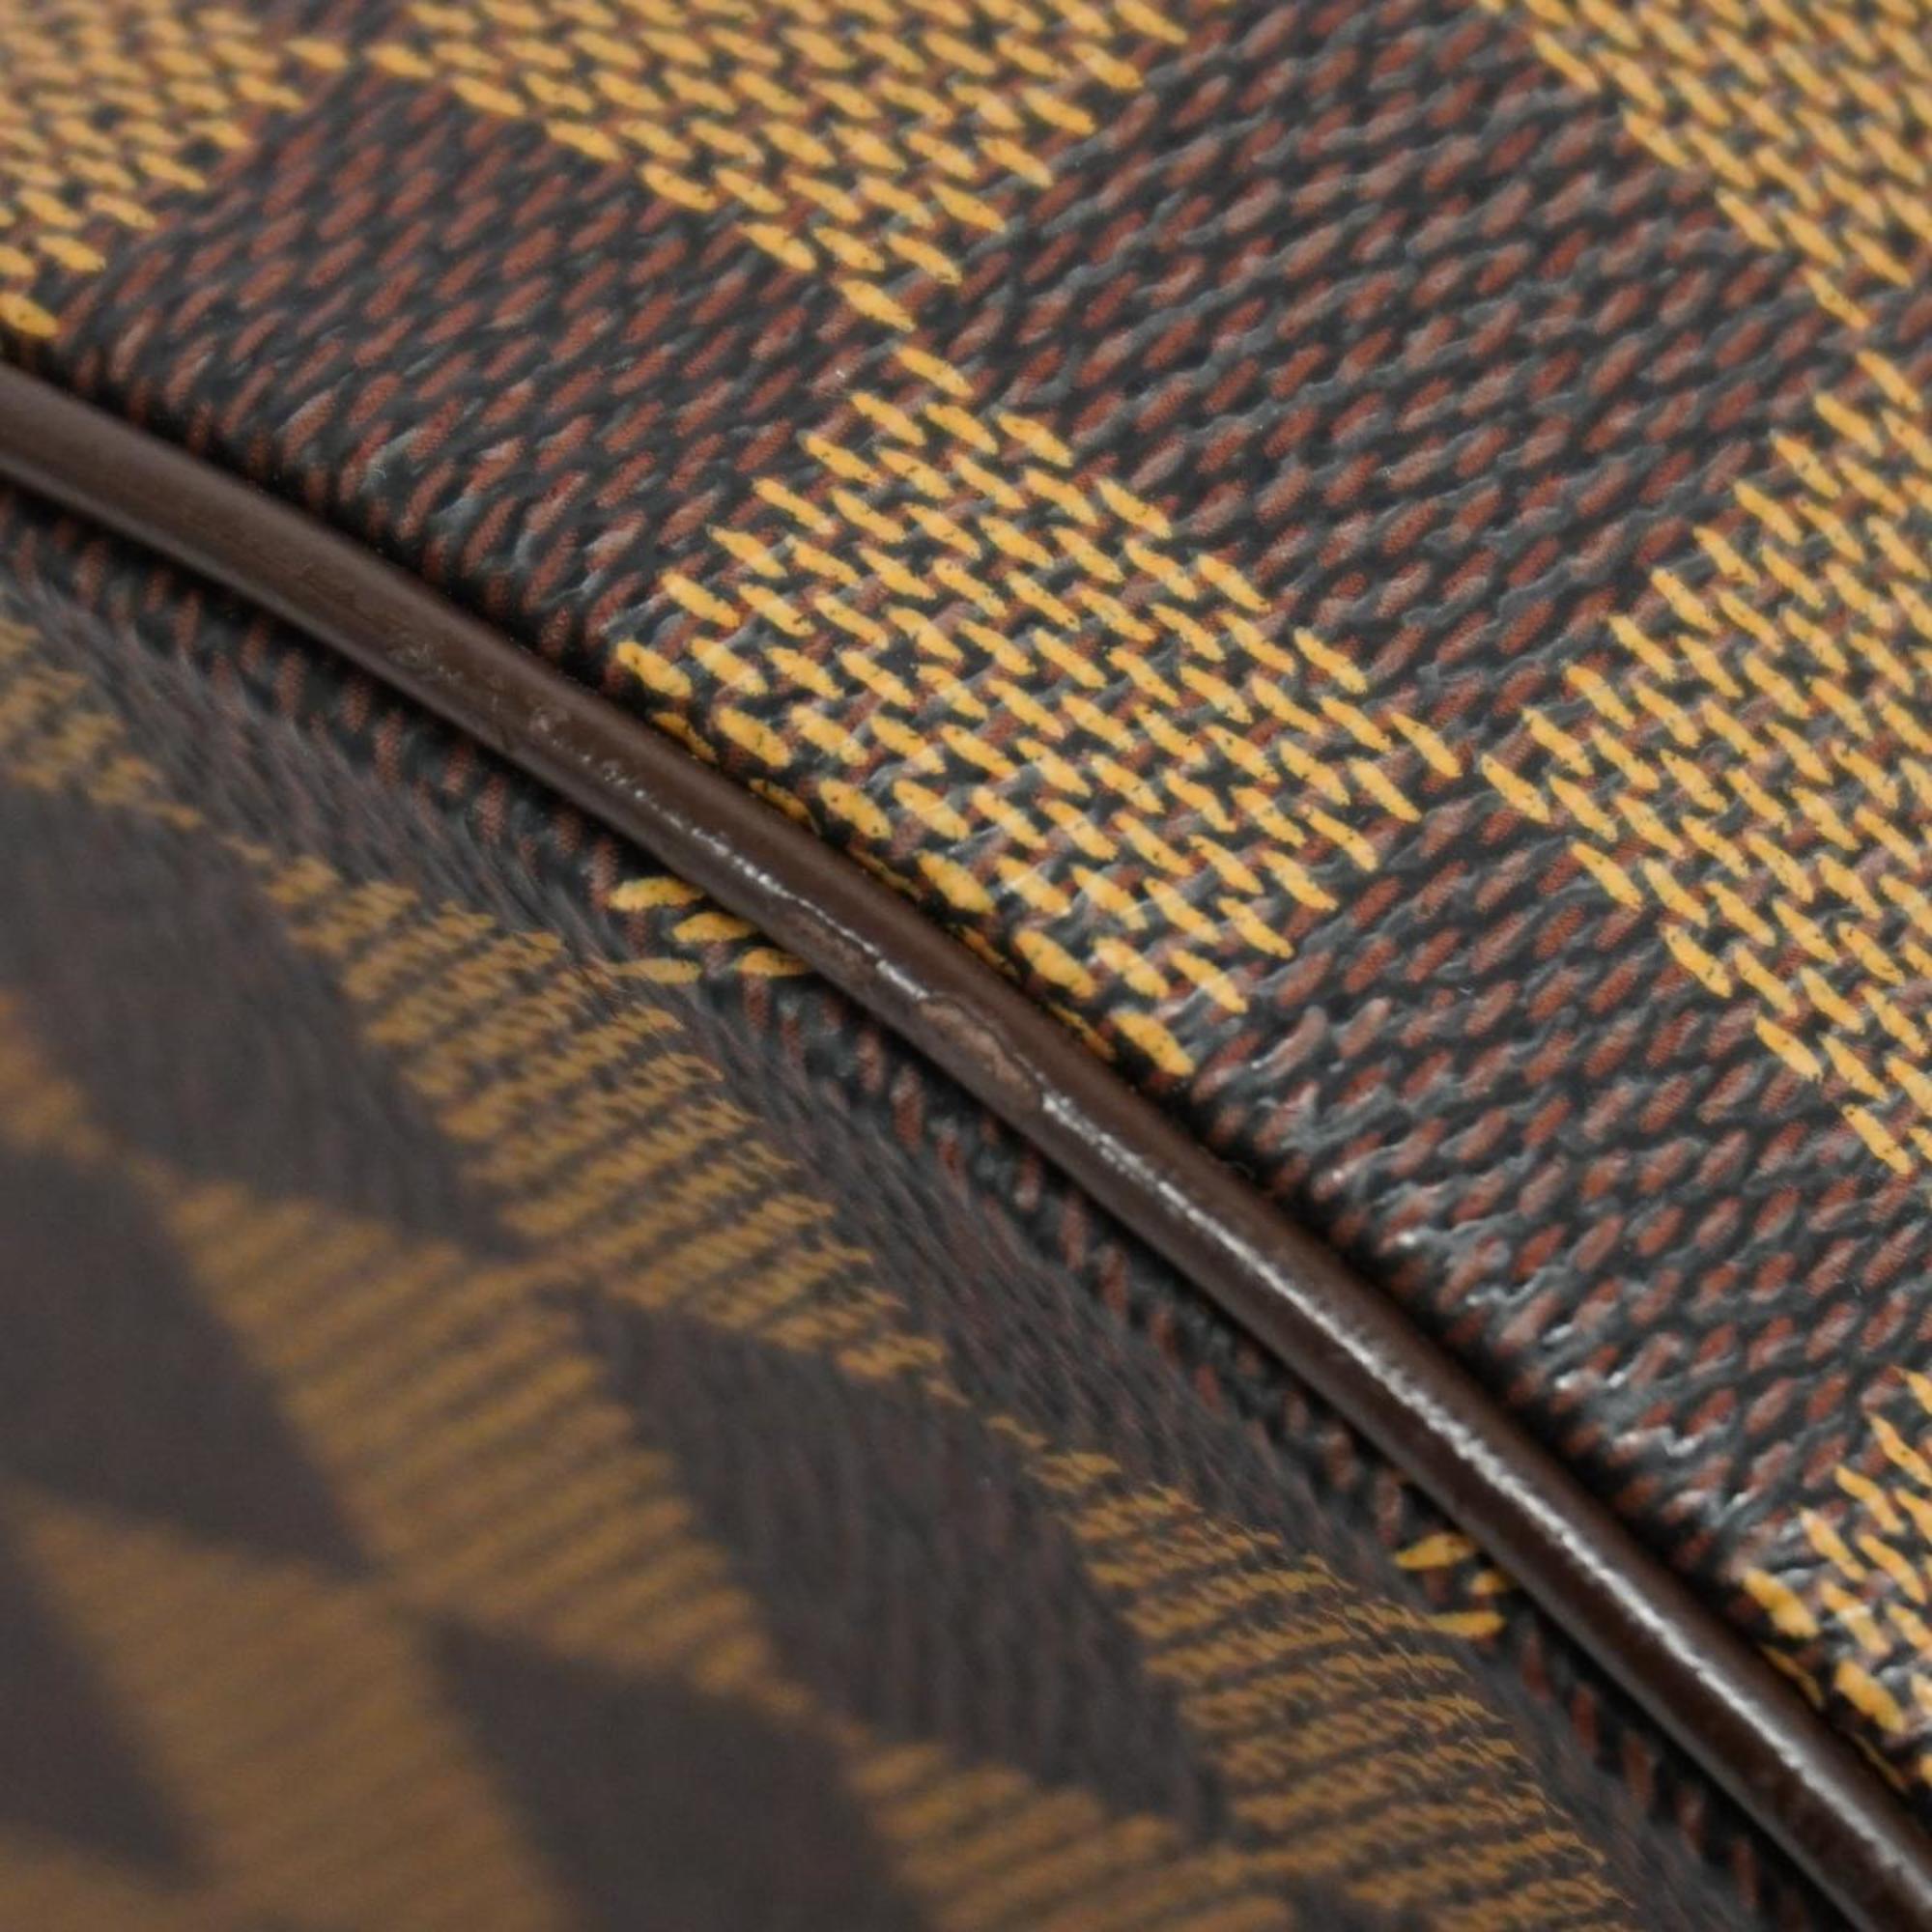 Louis Vuitton Handbag Damier Papillon 30 N51303 Ebene Ladies